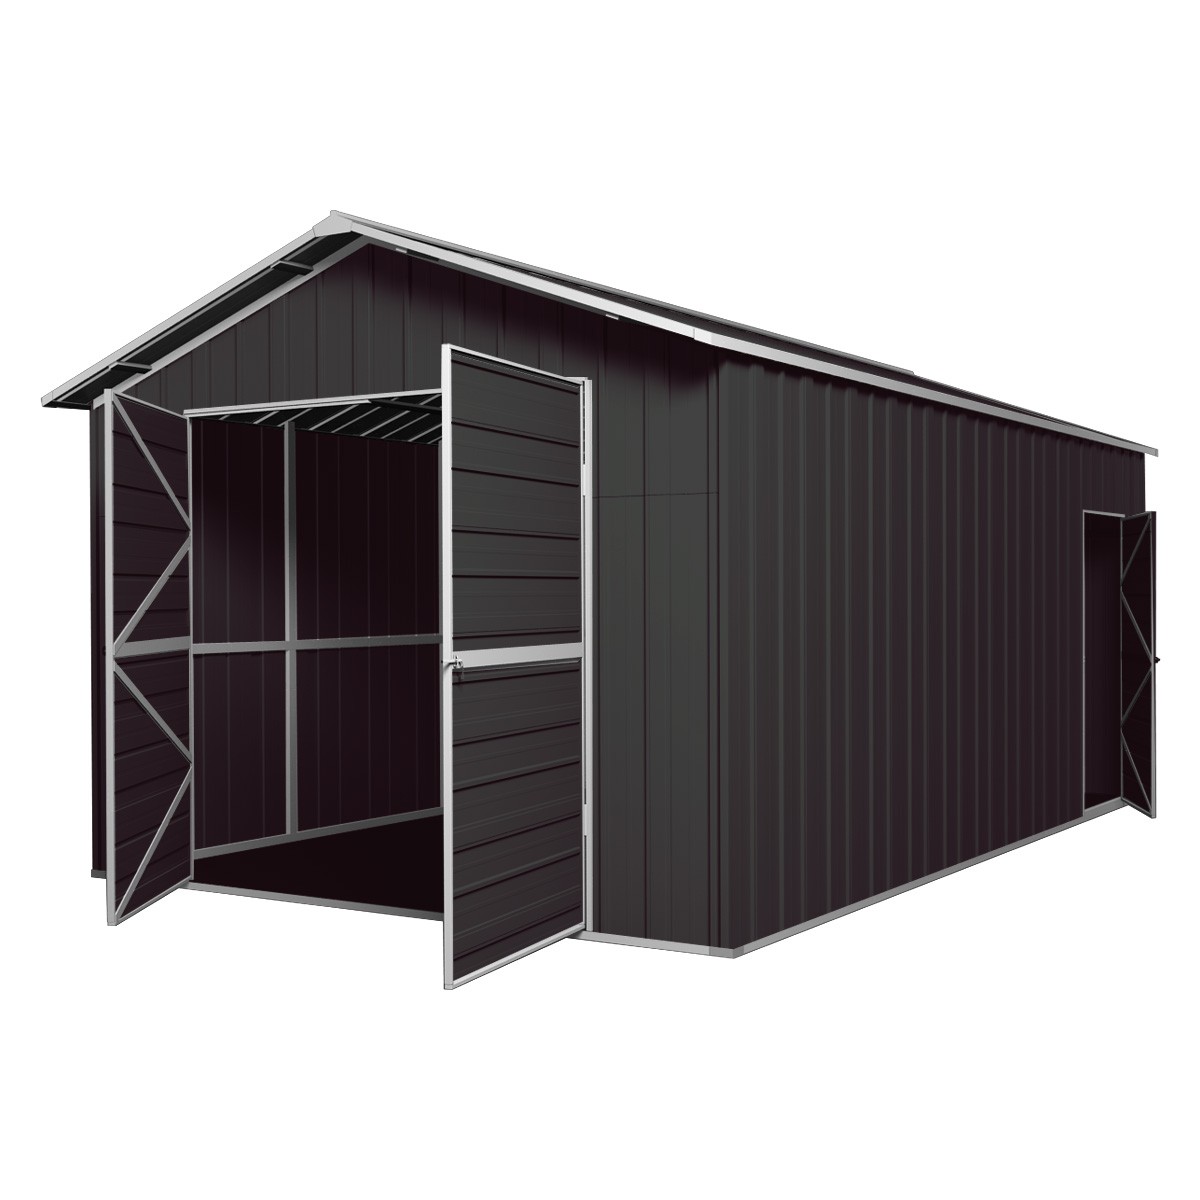 double barn door garage shed 3.4m x 6m x 3m gable